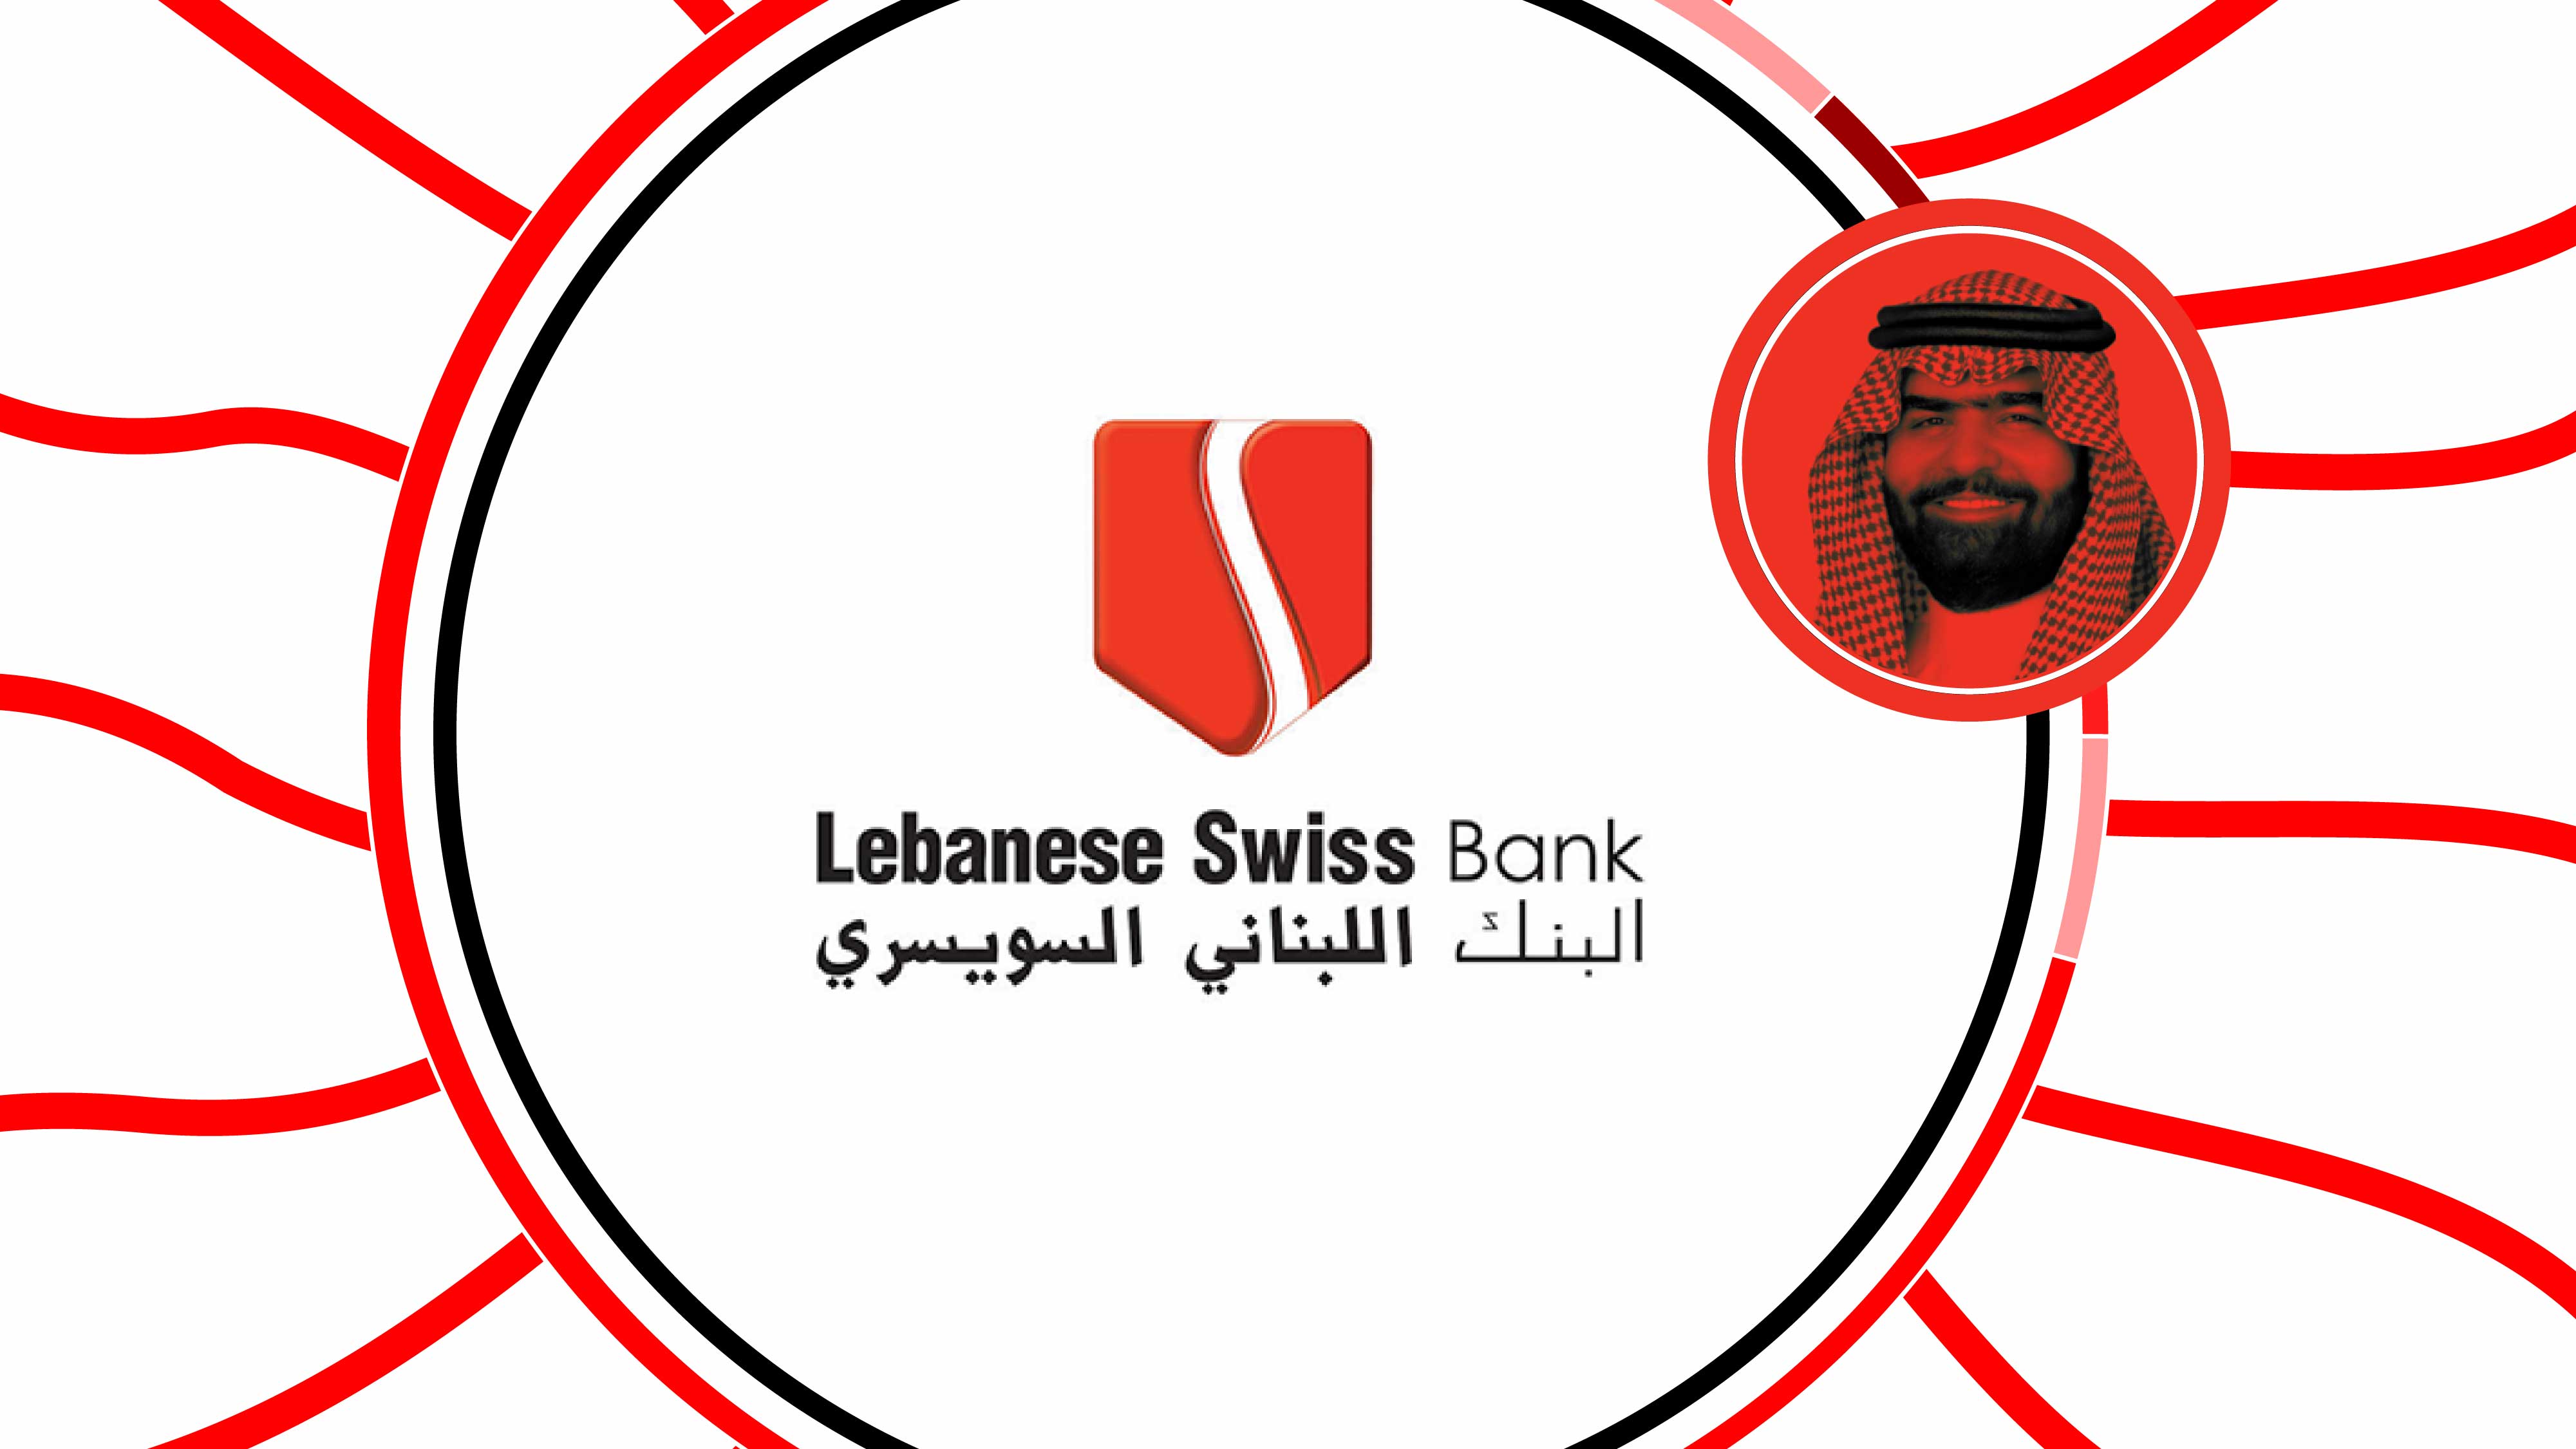 Lebanese Swiss Bank